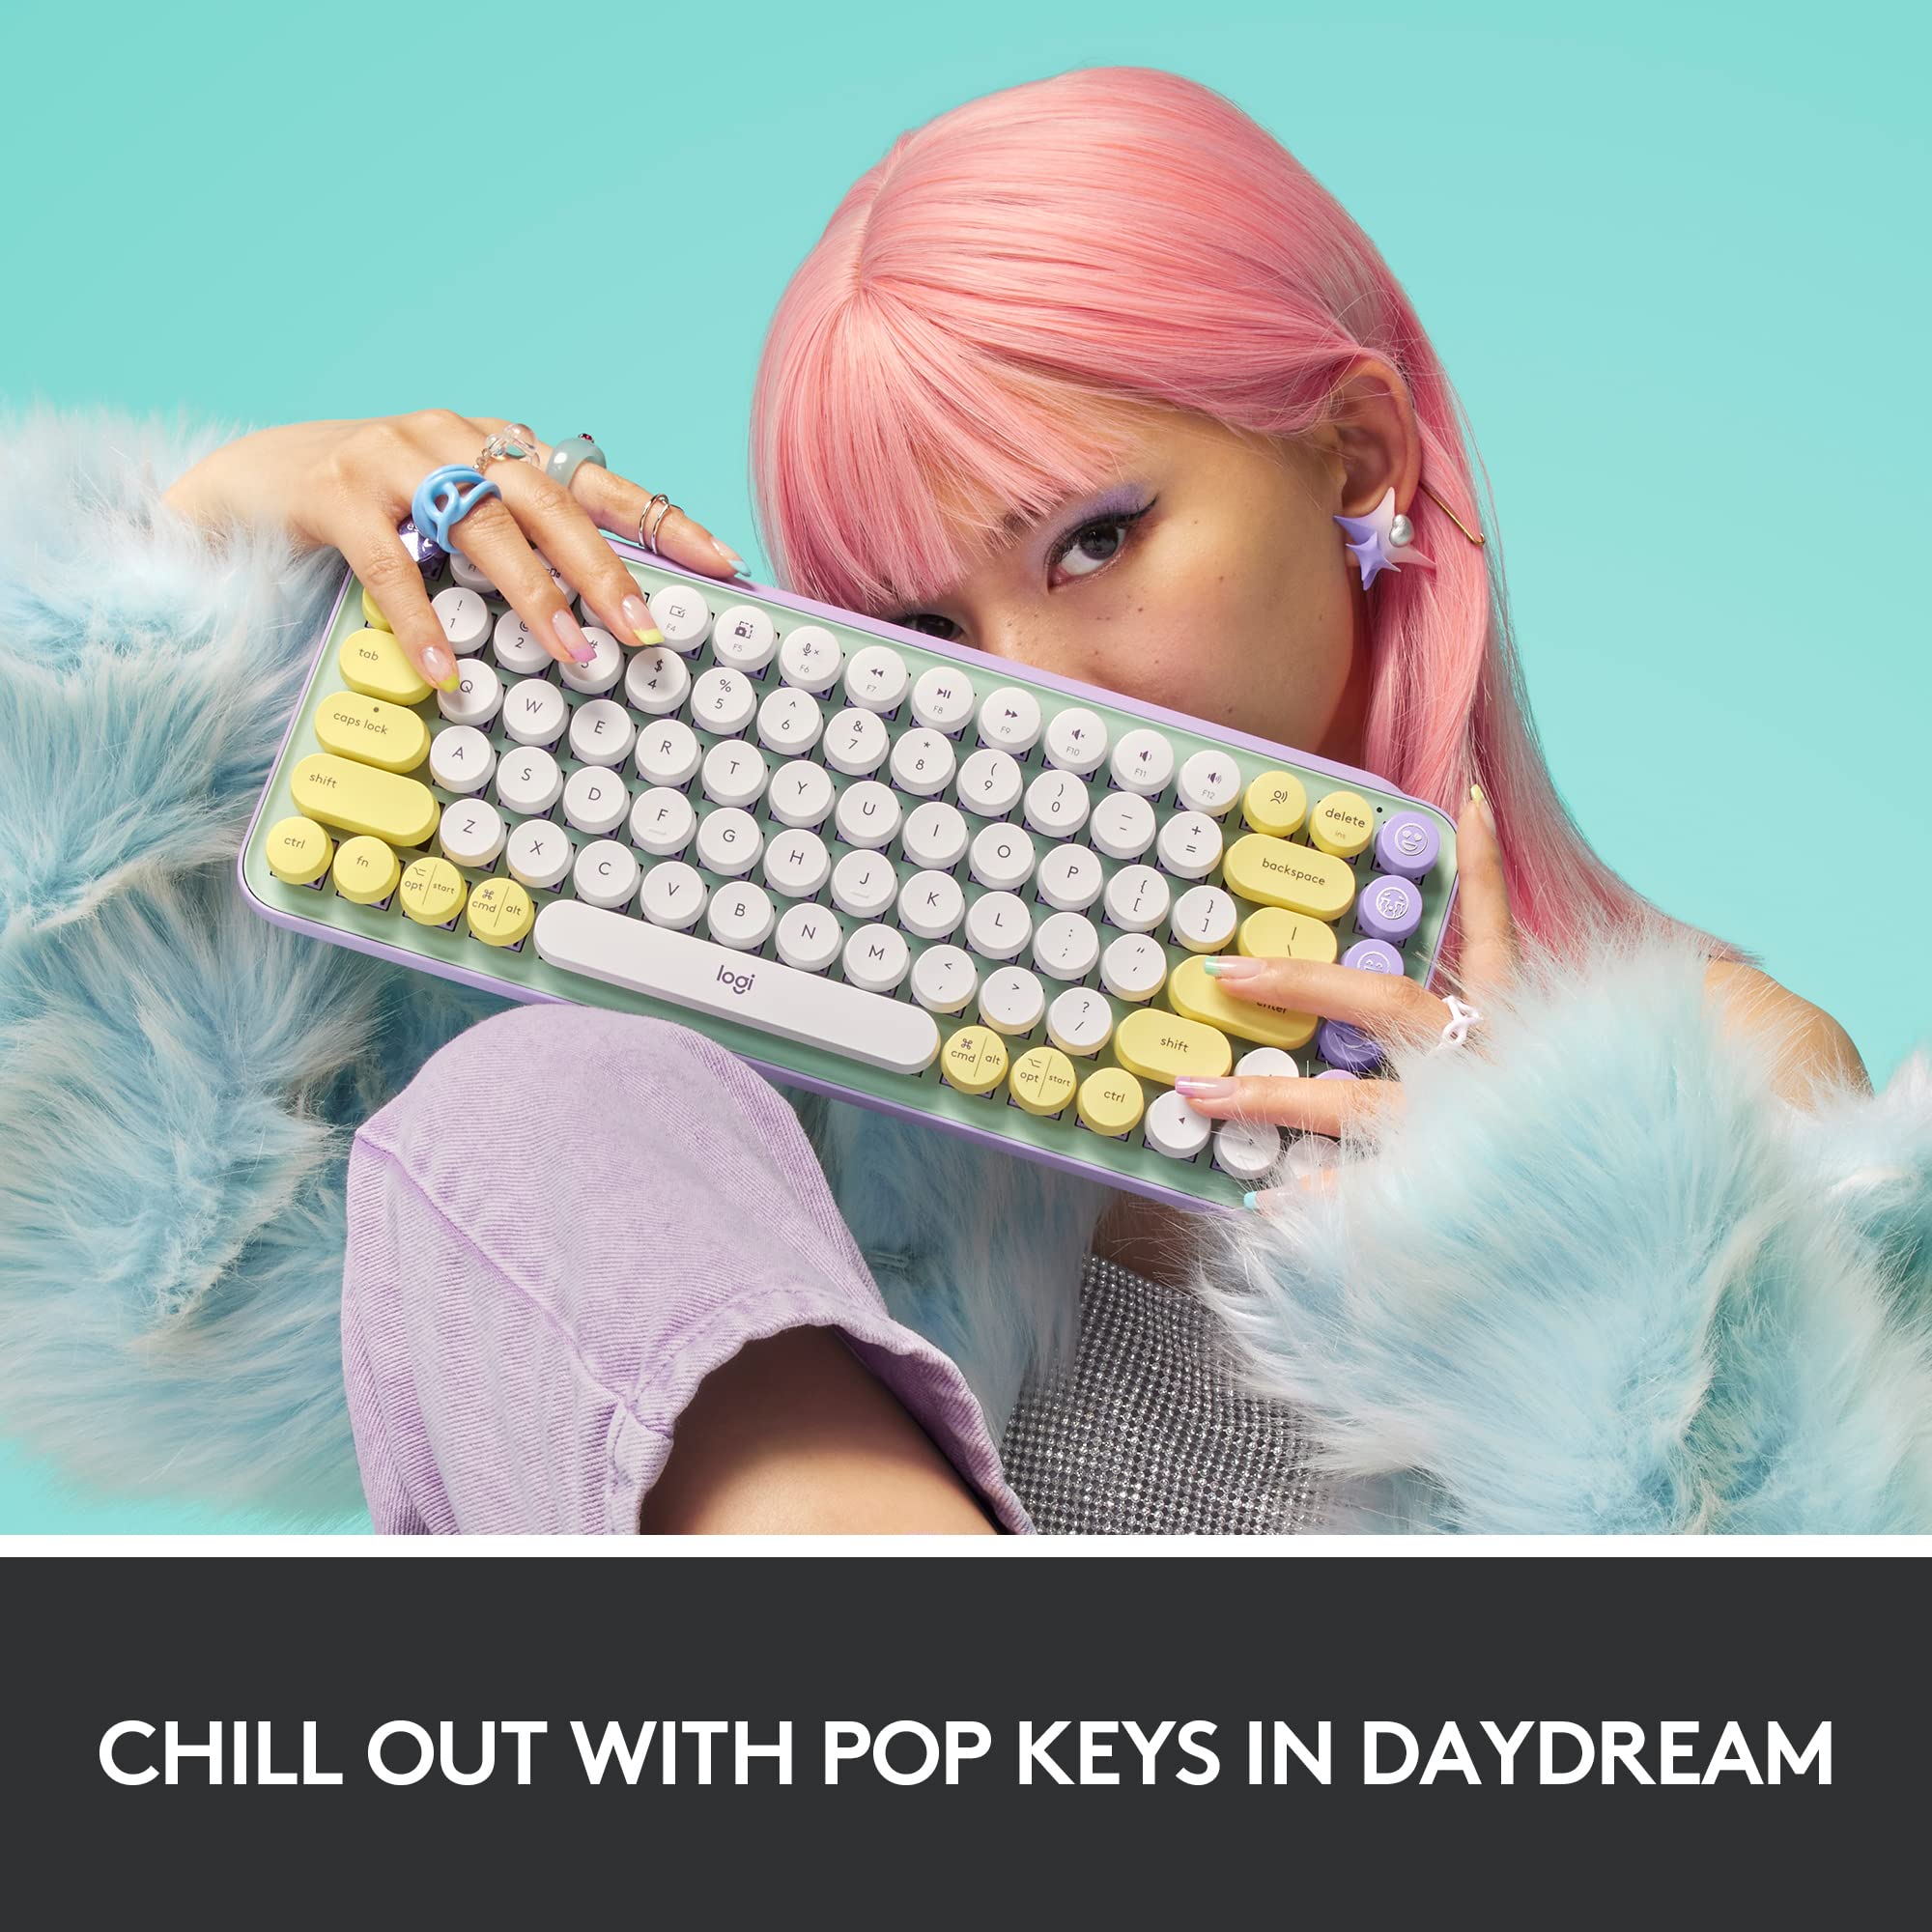 Logitech POP Keys Mechanical Wireless Keyboard with Customizable Emoji Keys, Durable Compact Design, Bluetooth or USB Connectivity, Multi-Device, OS Compatible - Daydream Mint (Renewed)